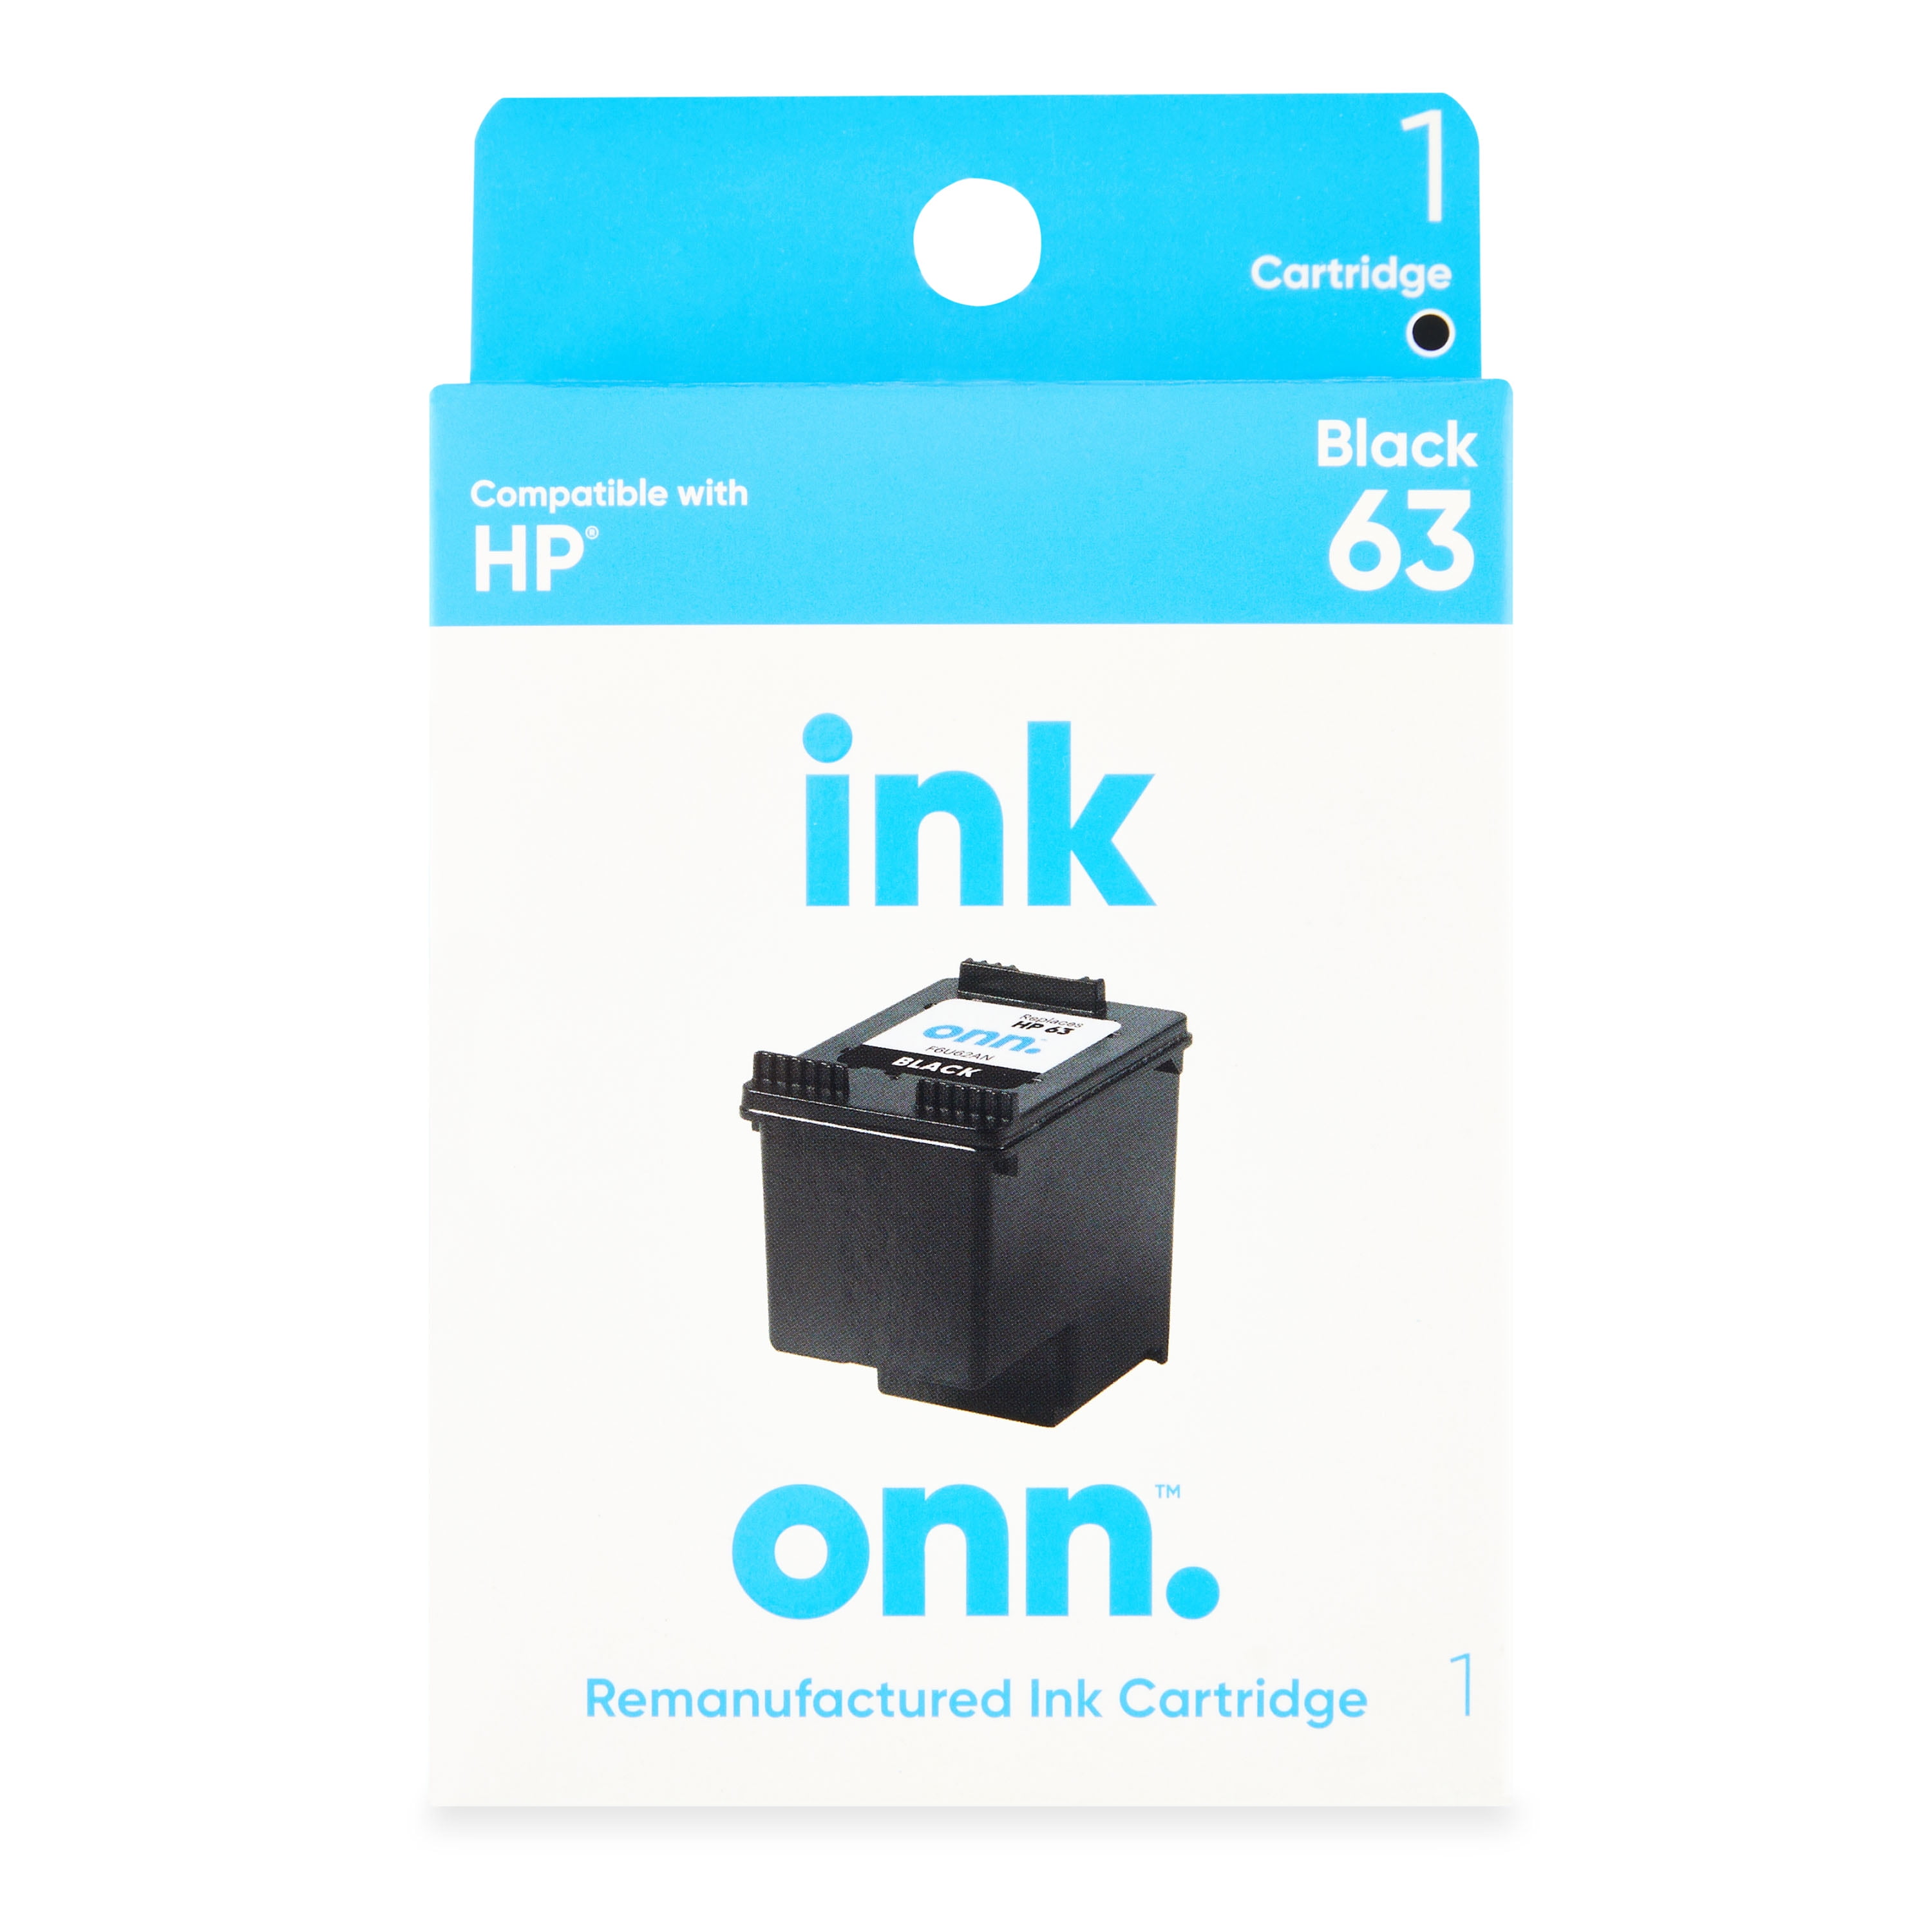 onn. Remanufactured Ink Cartridge, HP 63 Black